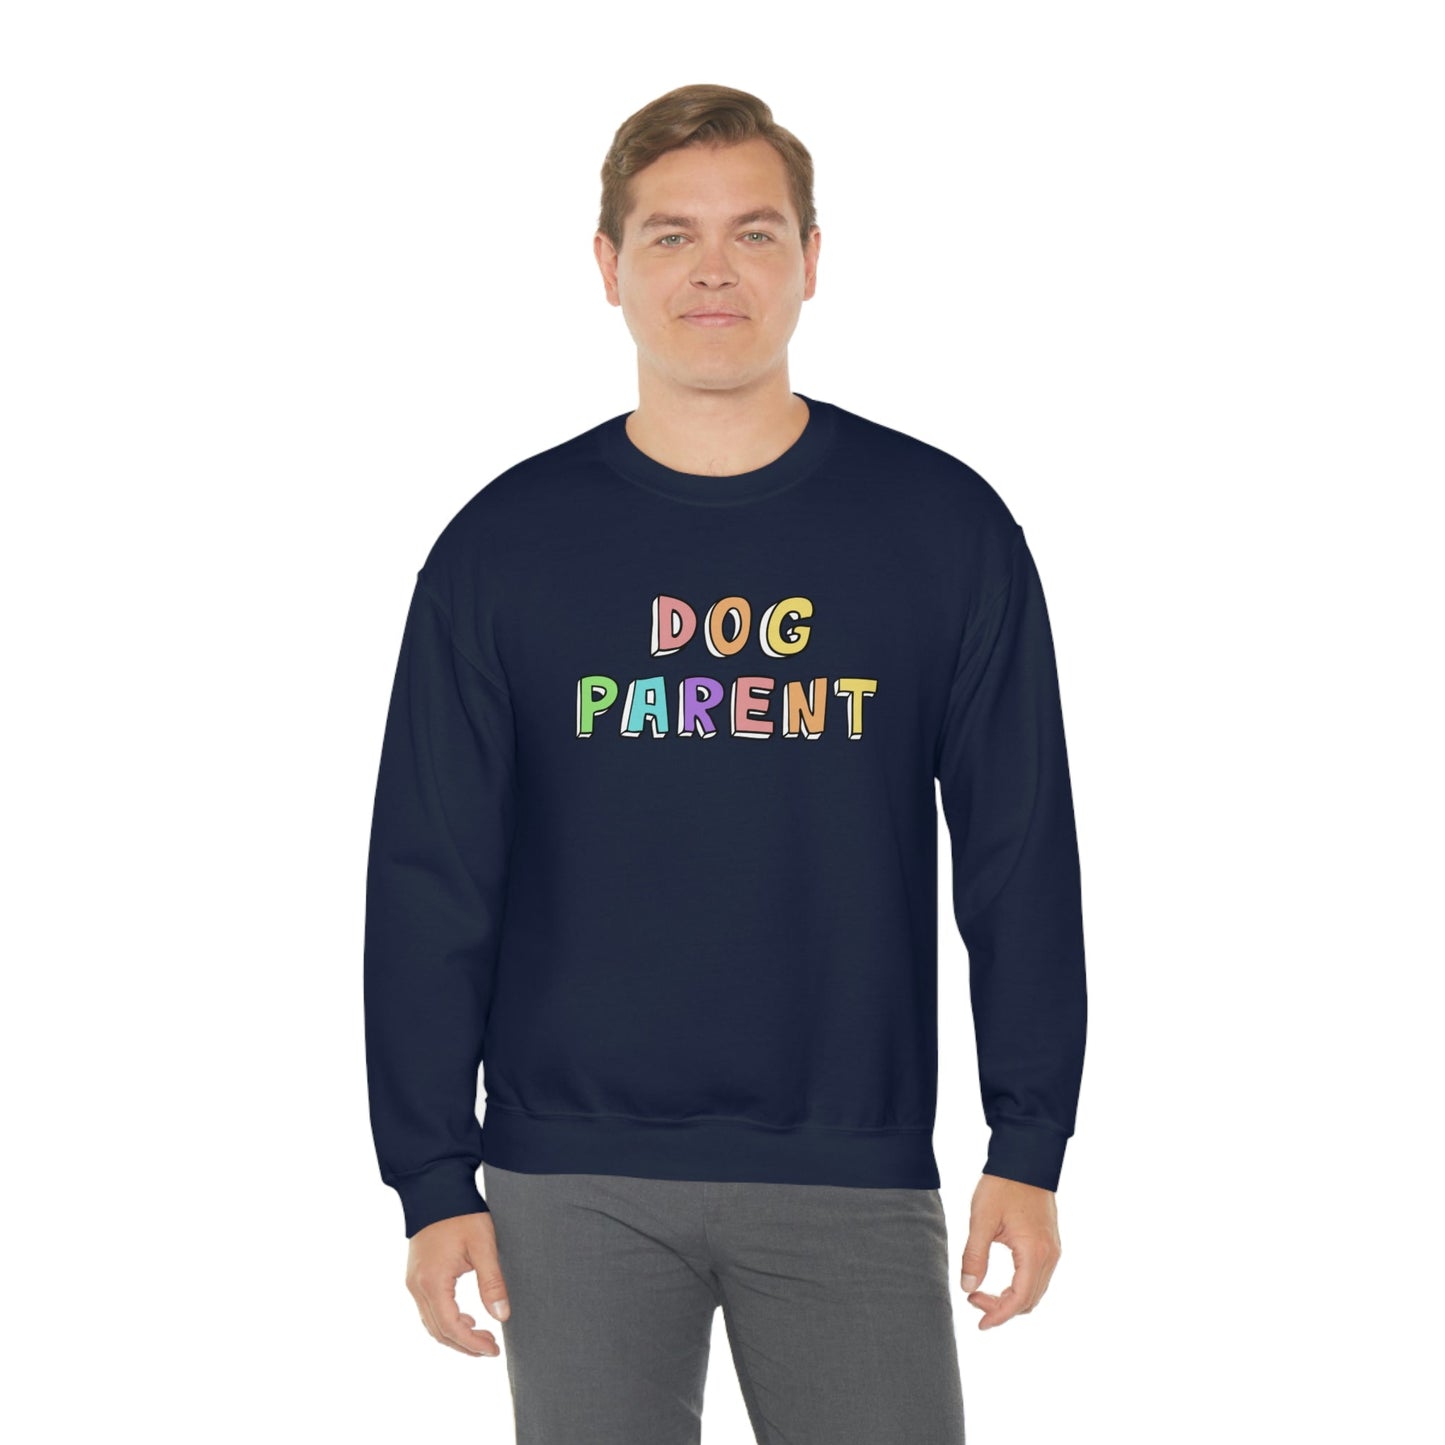 Dog Parent | Crewneck Sweatshirt - Detezi Designs-23894046438251815261